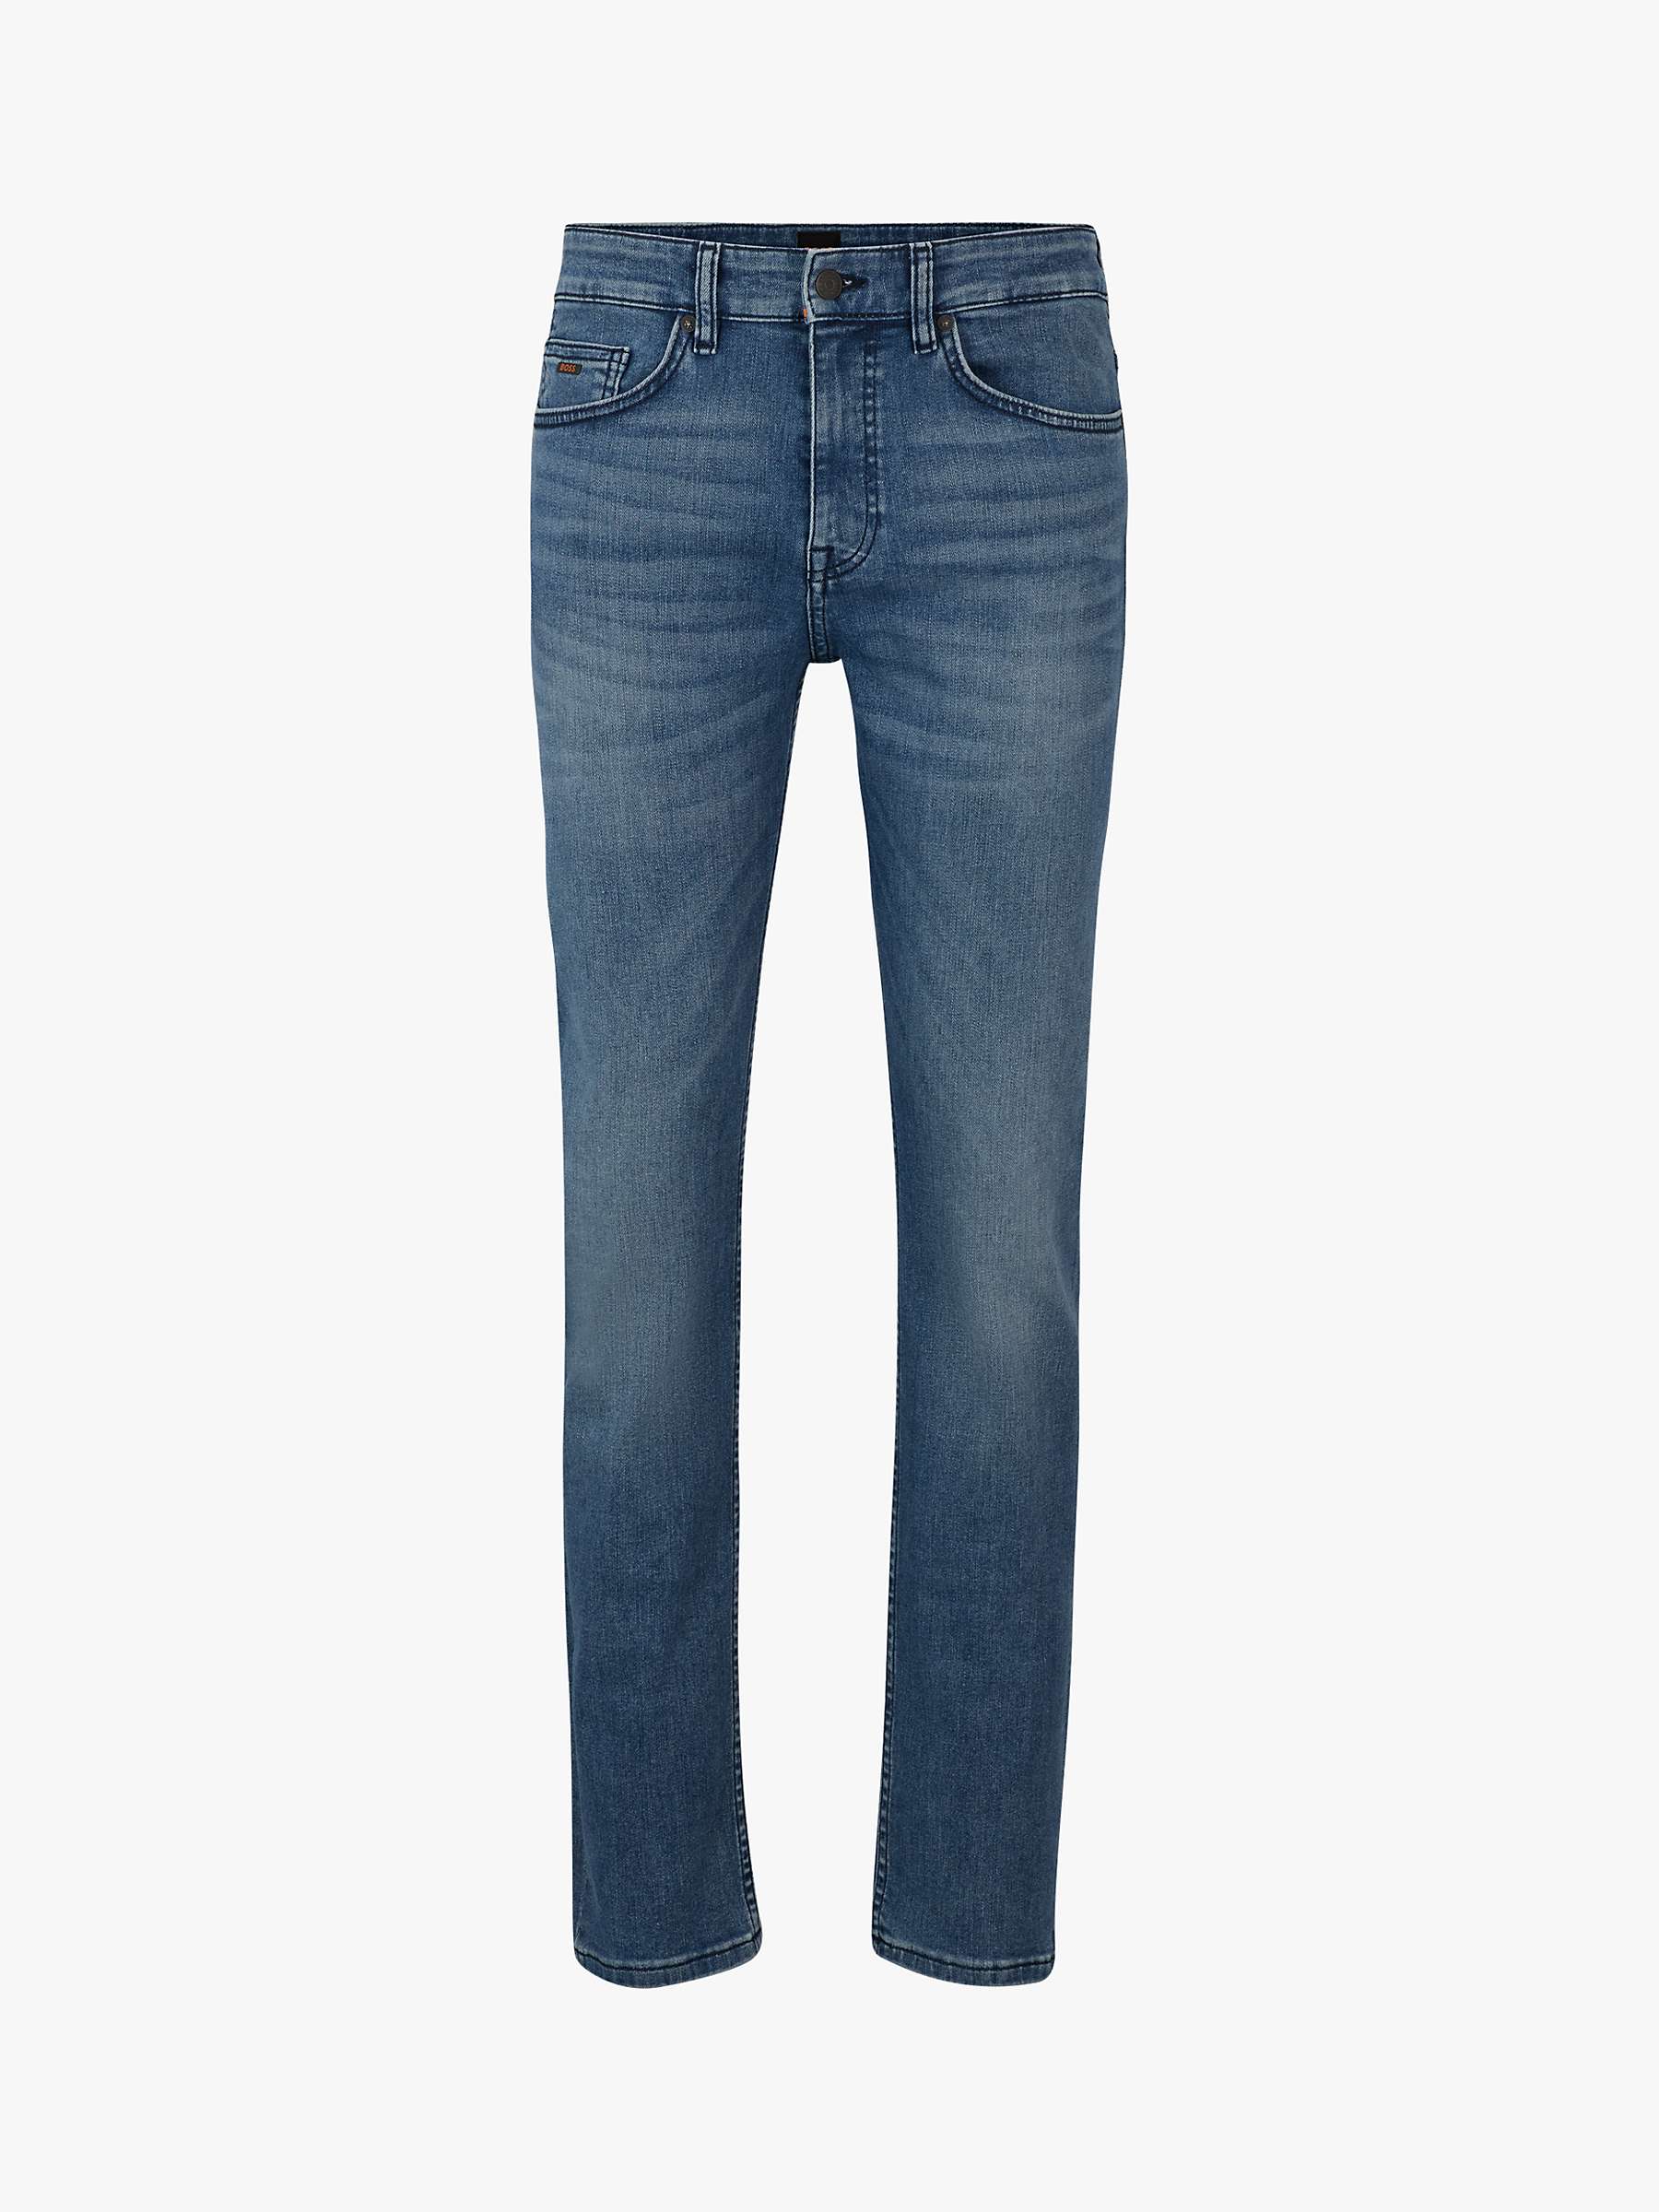 Buy BOSS Delaware Slim Fit Jeans, Blue Online at johnlewis.com